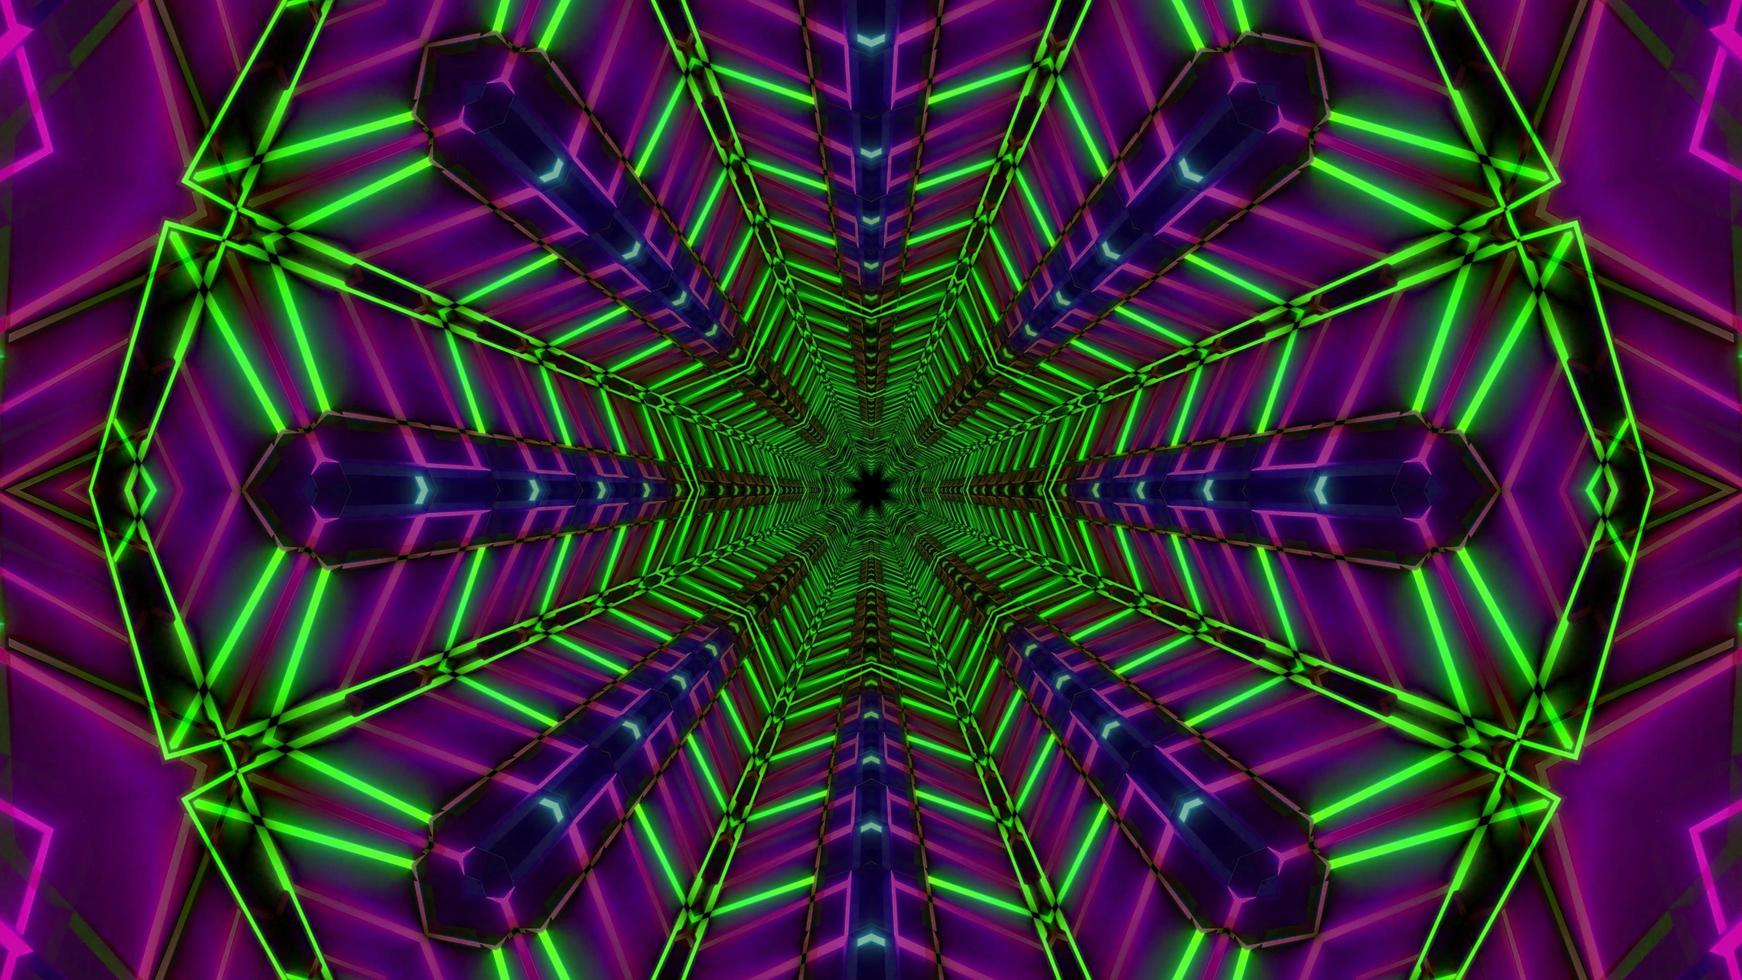 groene radar gekleurde neon ster 3d illustratie achtergrond behang ontwerp kunstwerk foto